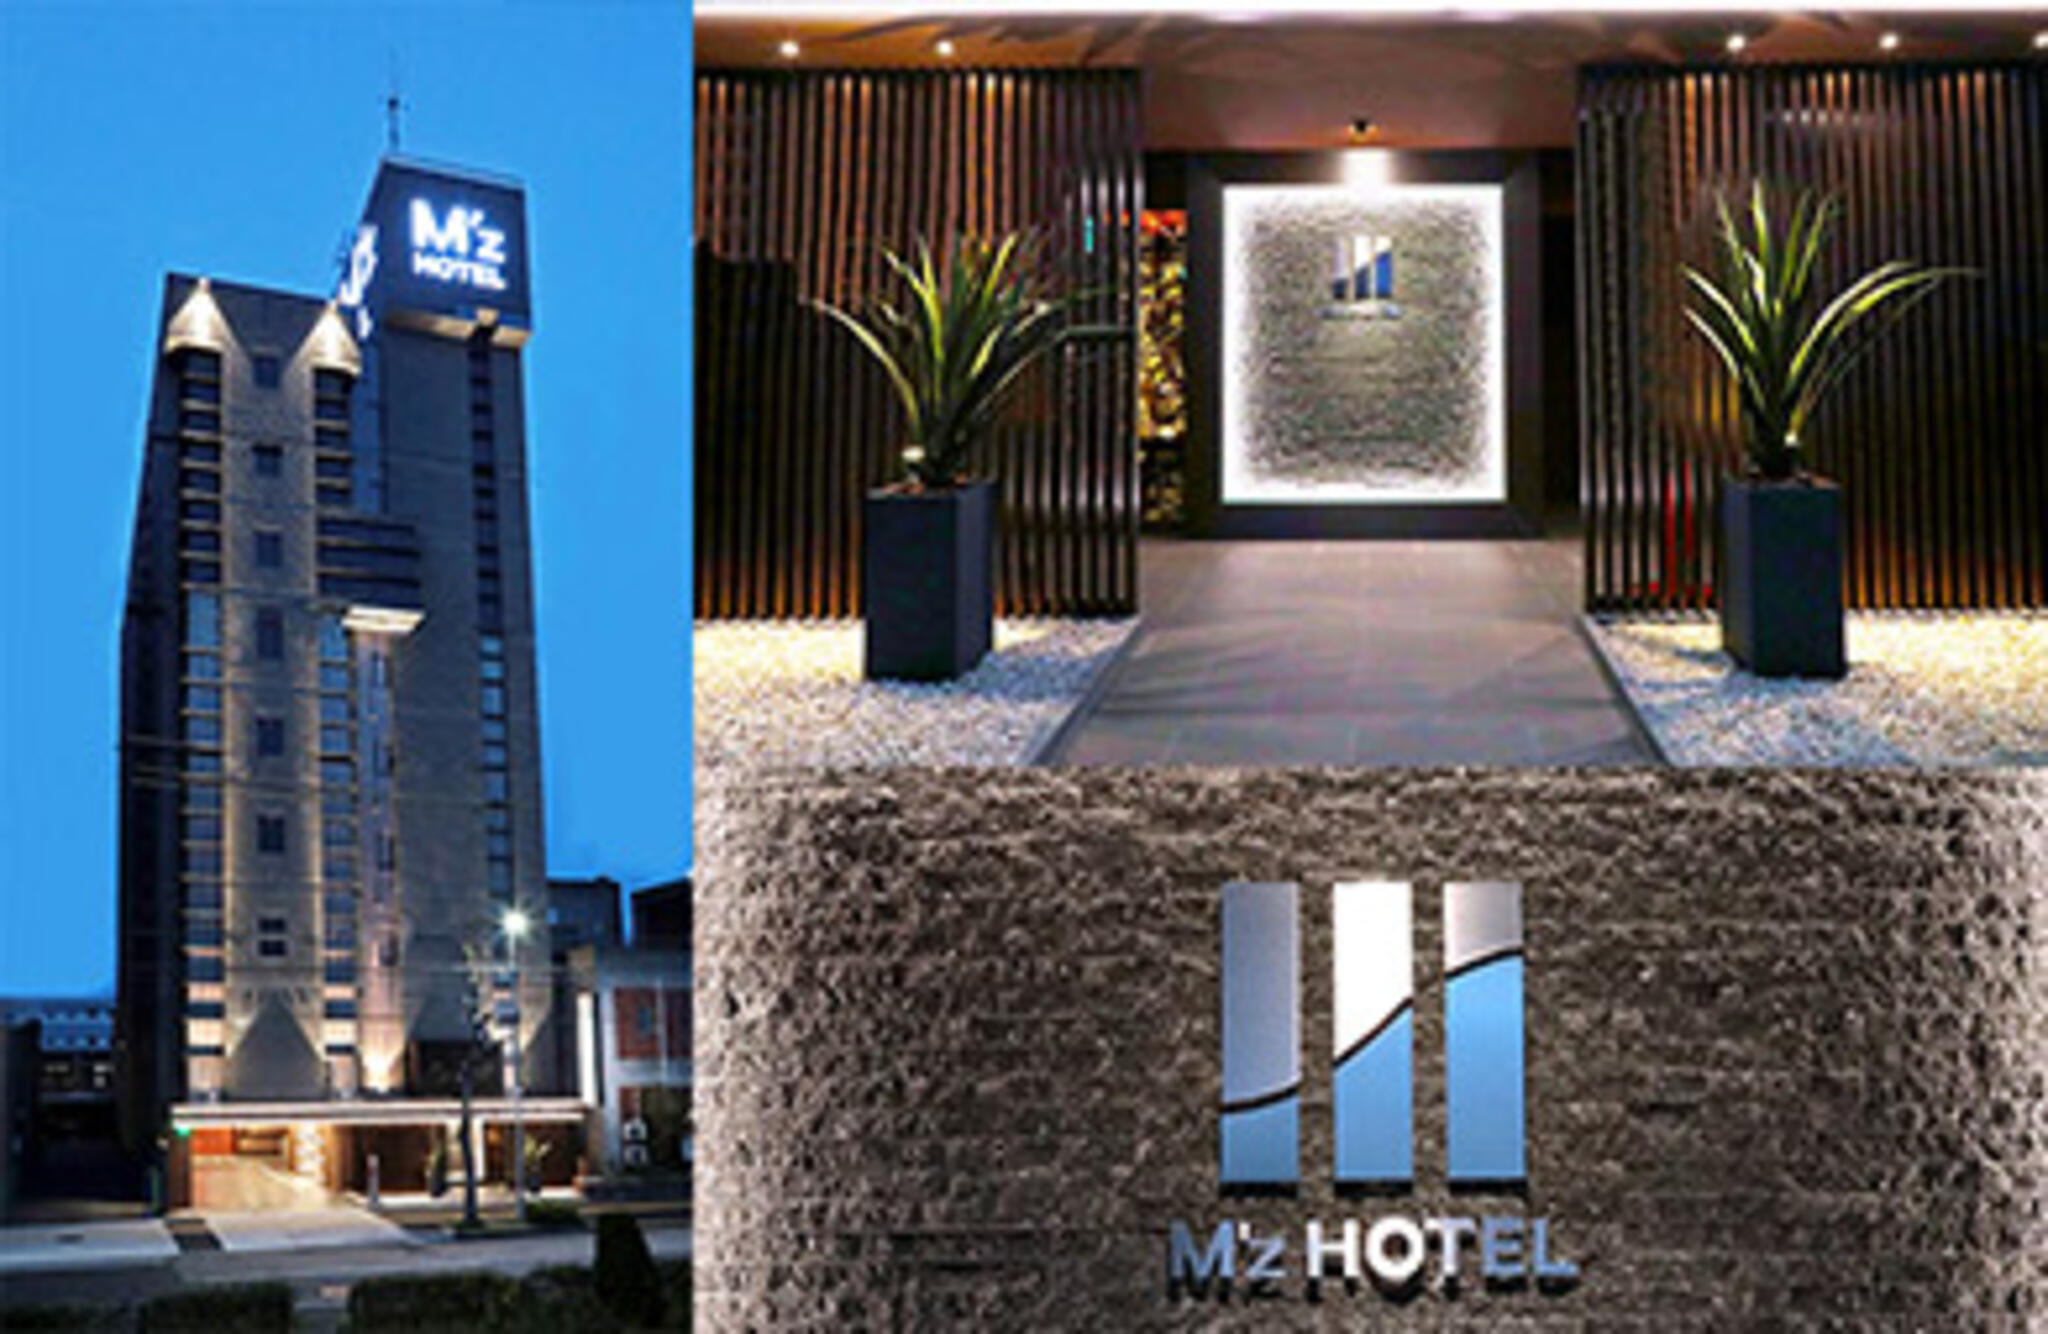 M‘z HOTEL(エムズ ホテル)の代表写真1